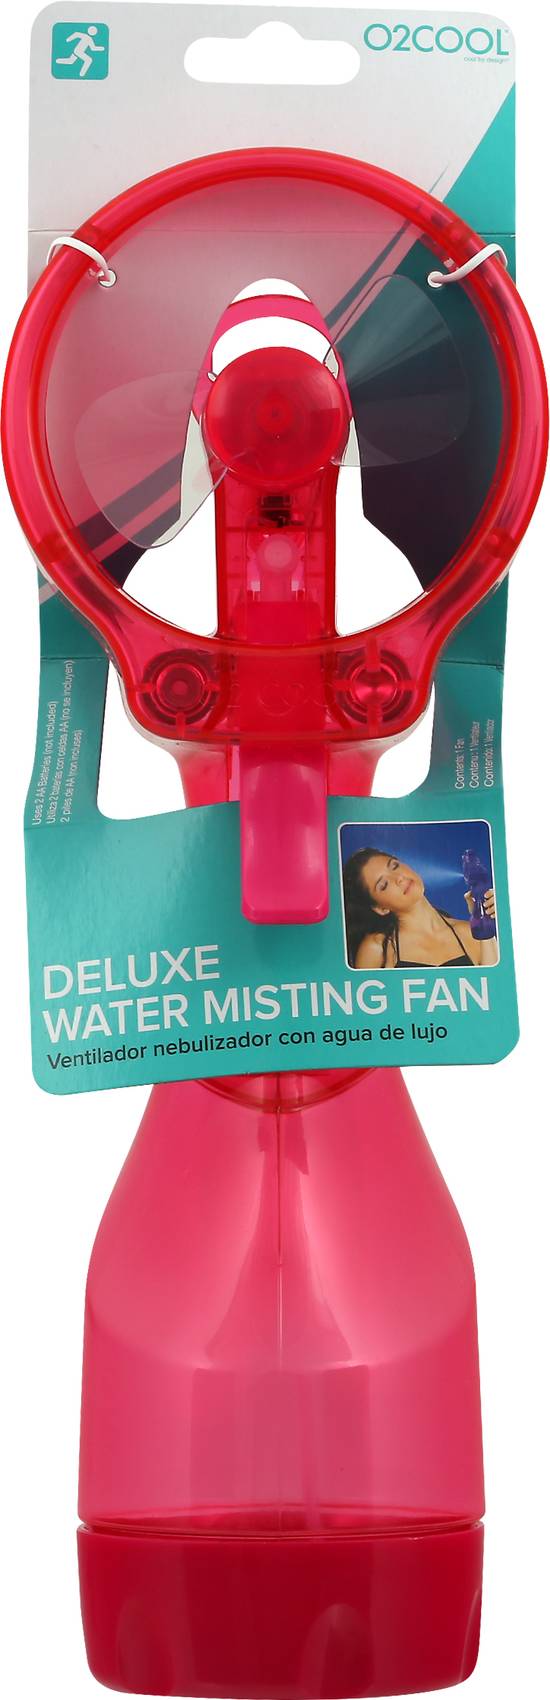 O2cool Deluxe Water Misting Fan